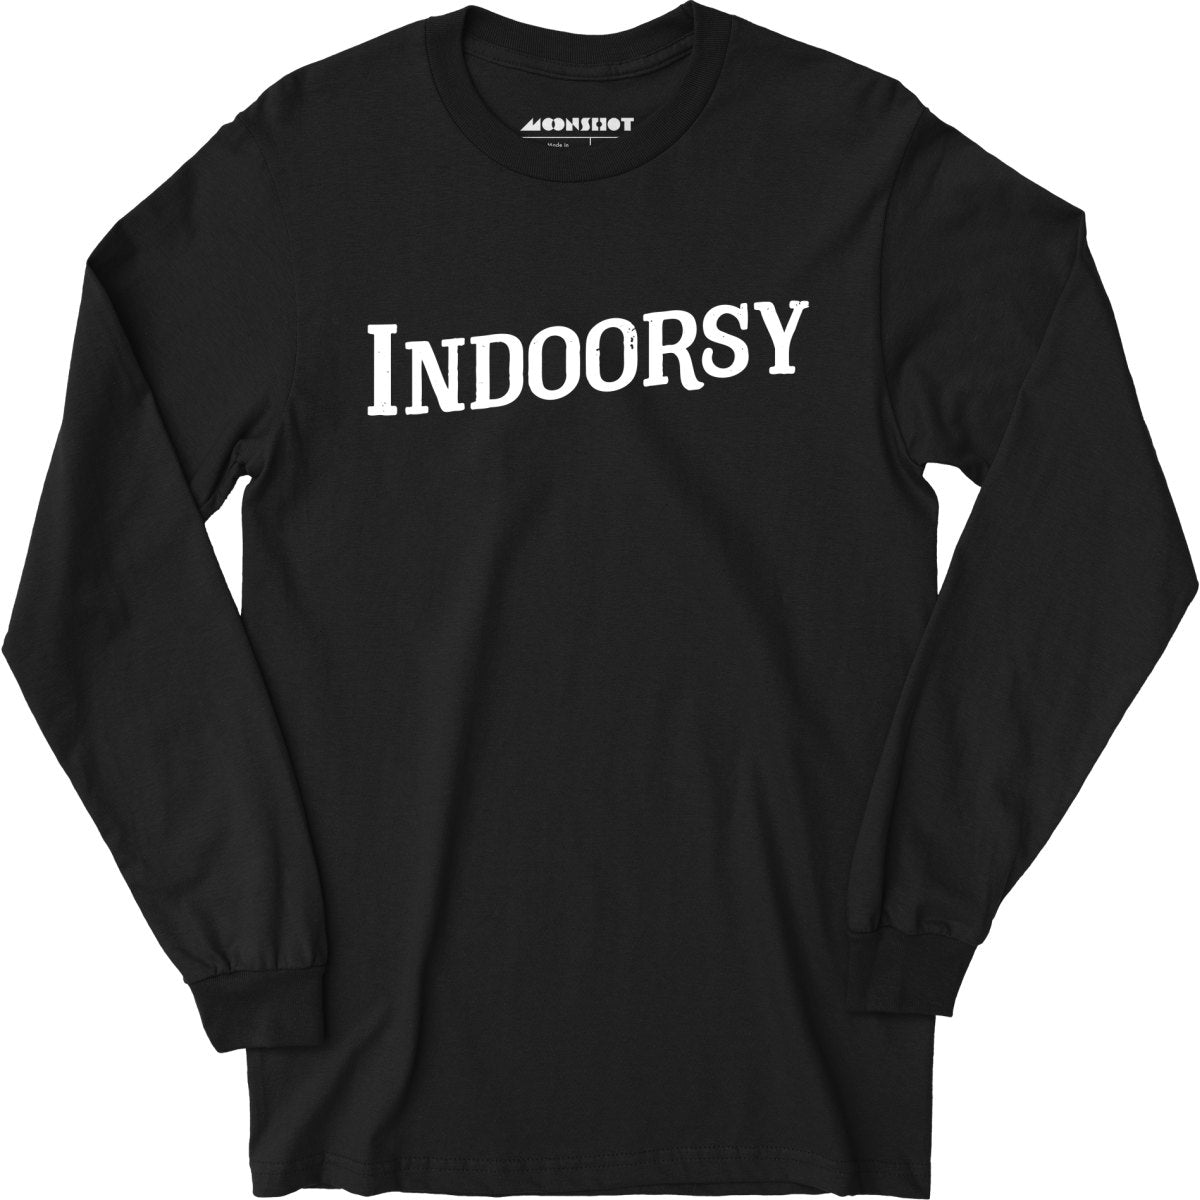 Indoorsy - Long Sleeve T-Shirt